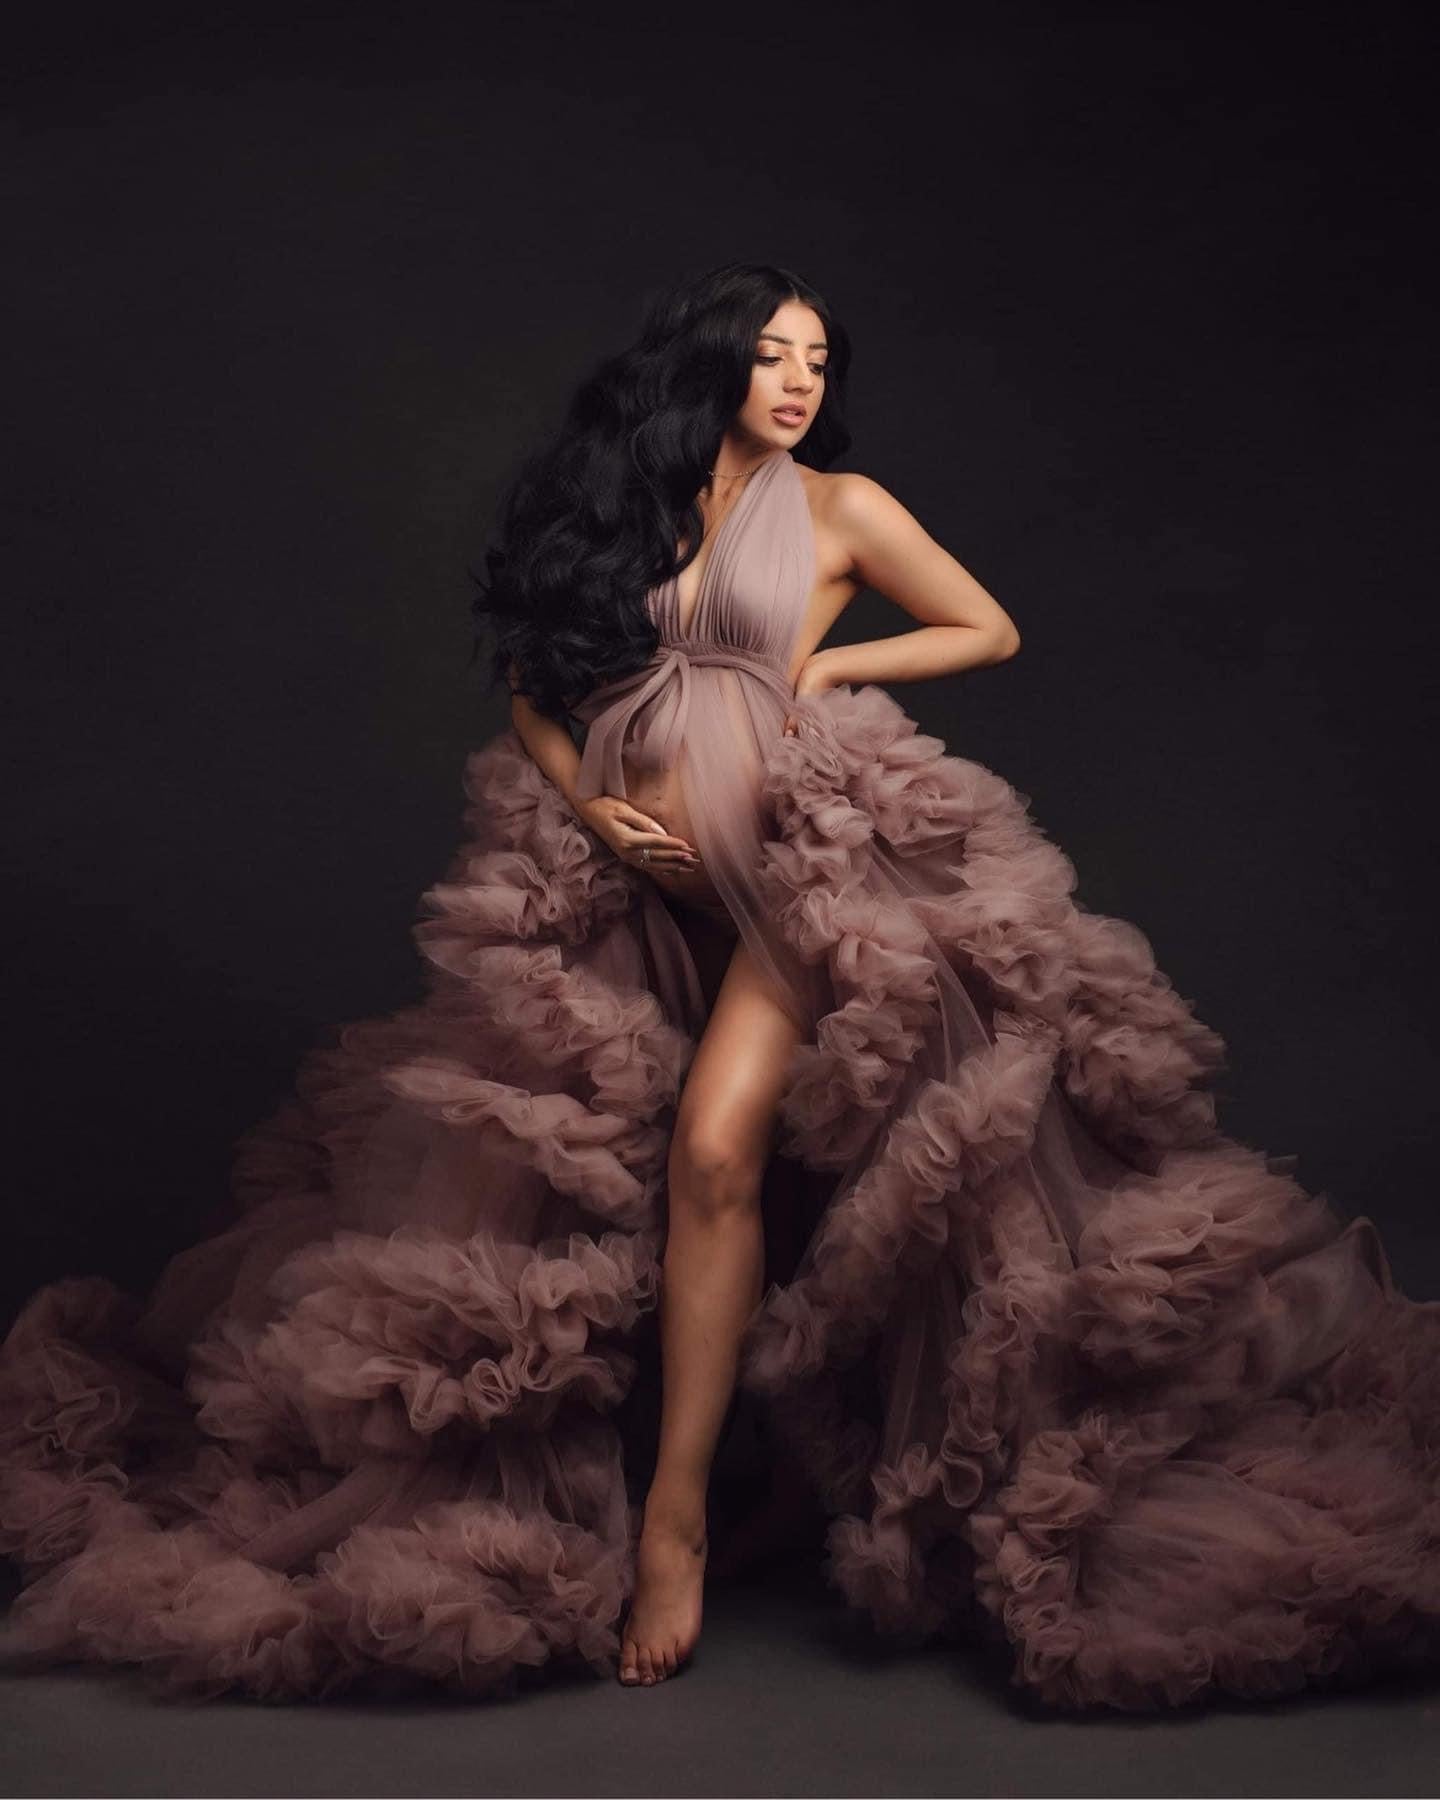 Mauve Esmeralda Gown - maternity photoshoot dress